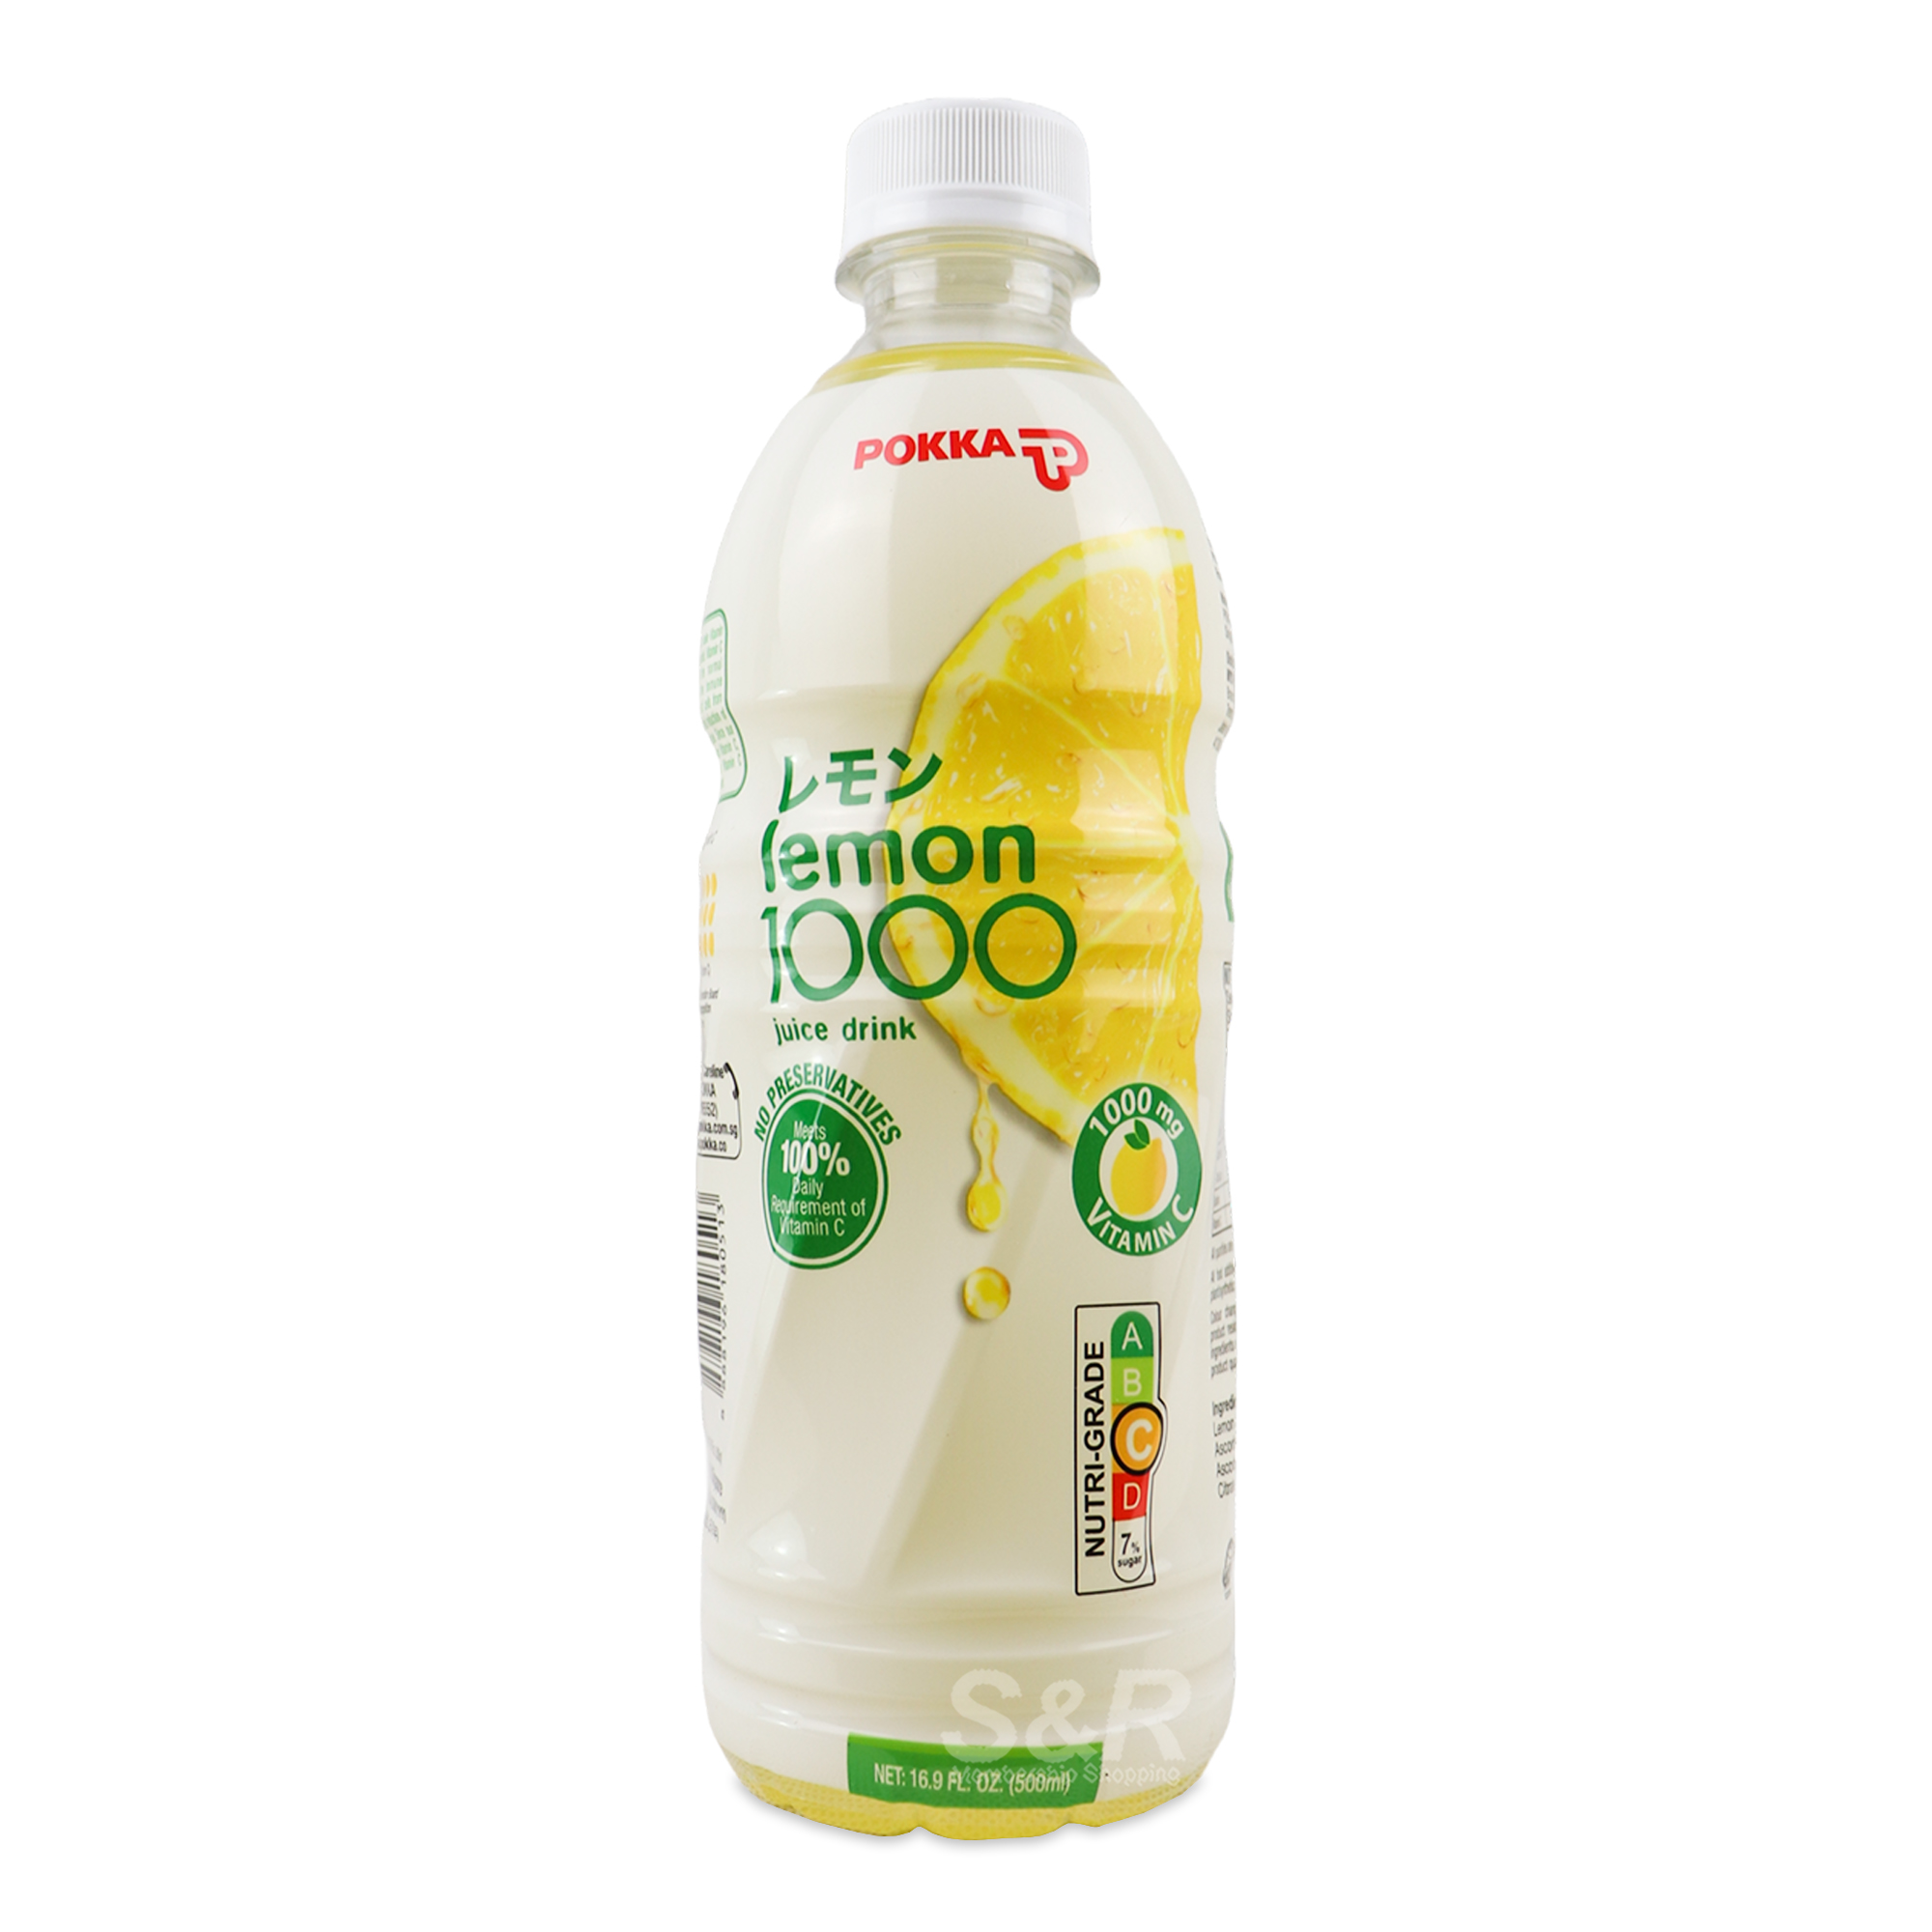 Pokka 1000 Lemon Juice Drink 500mL